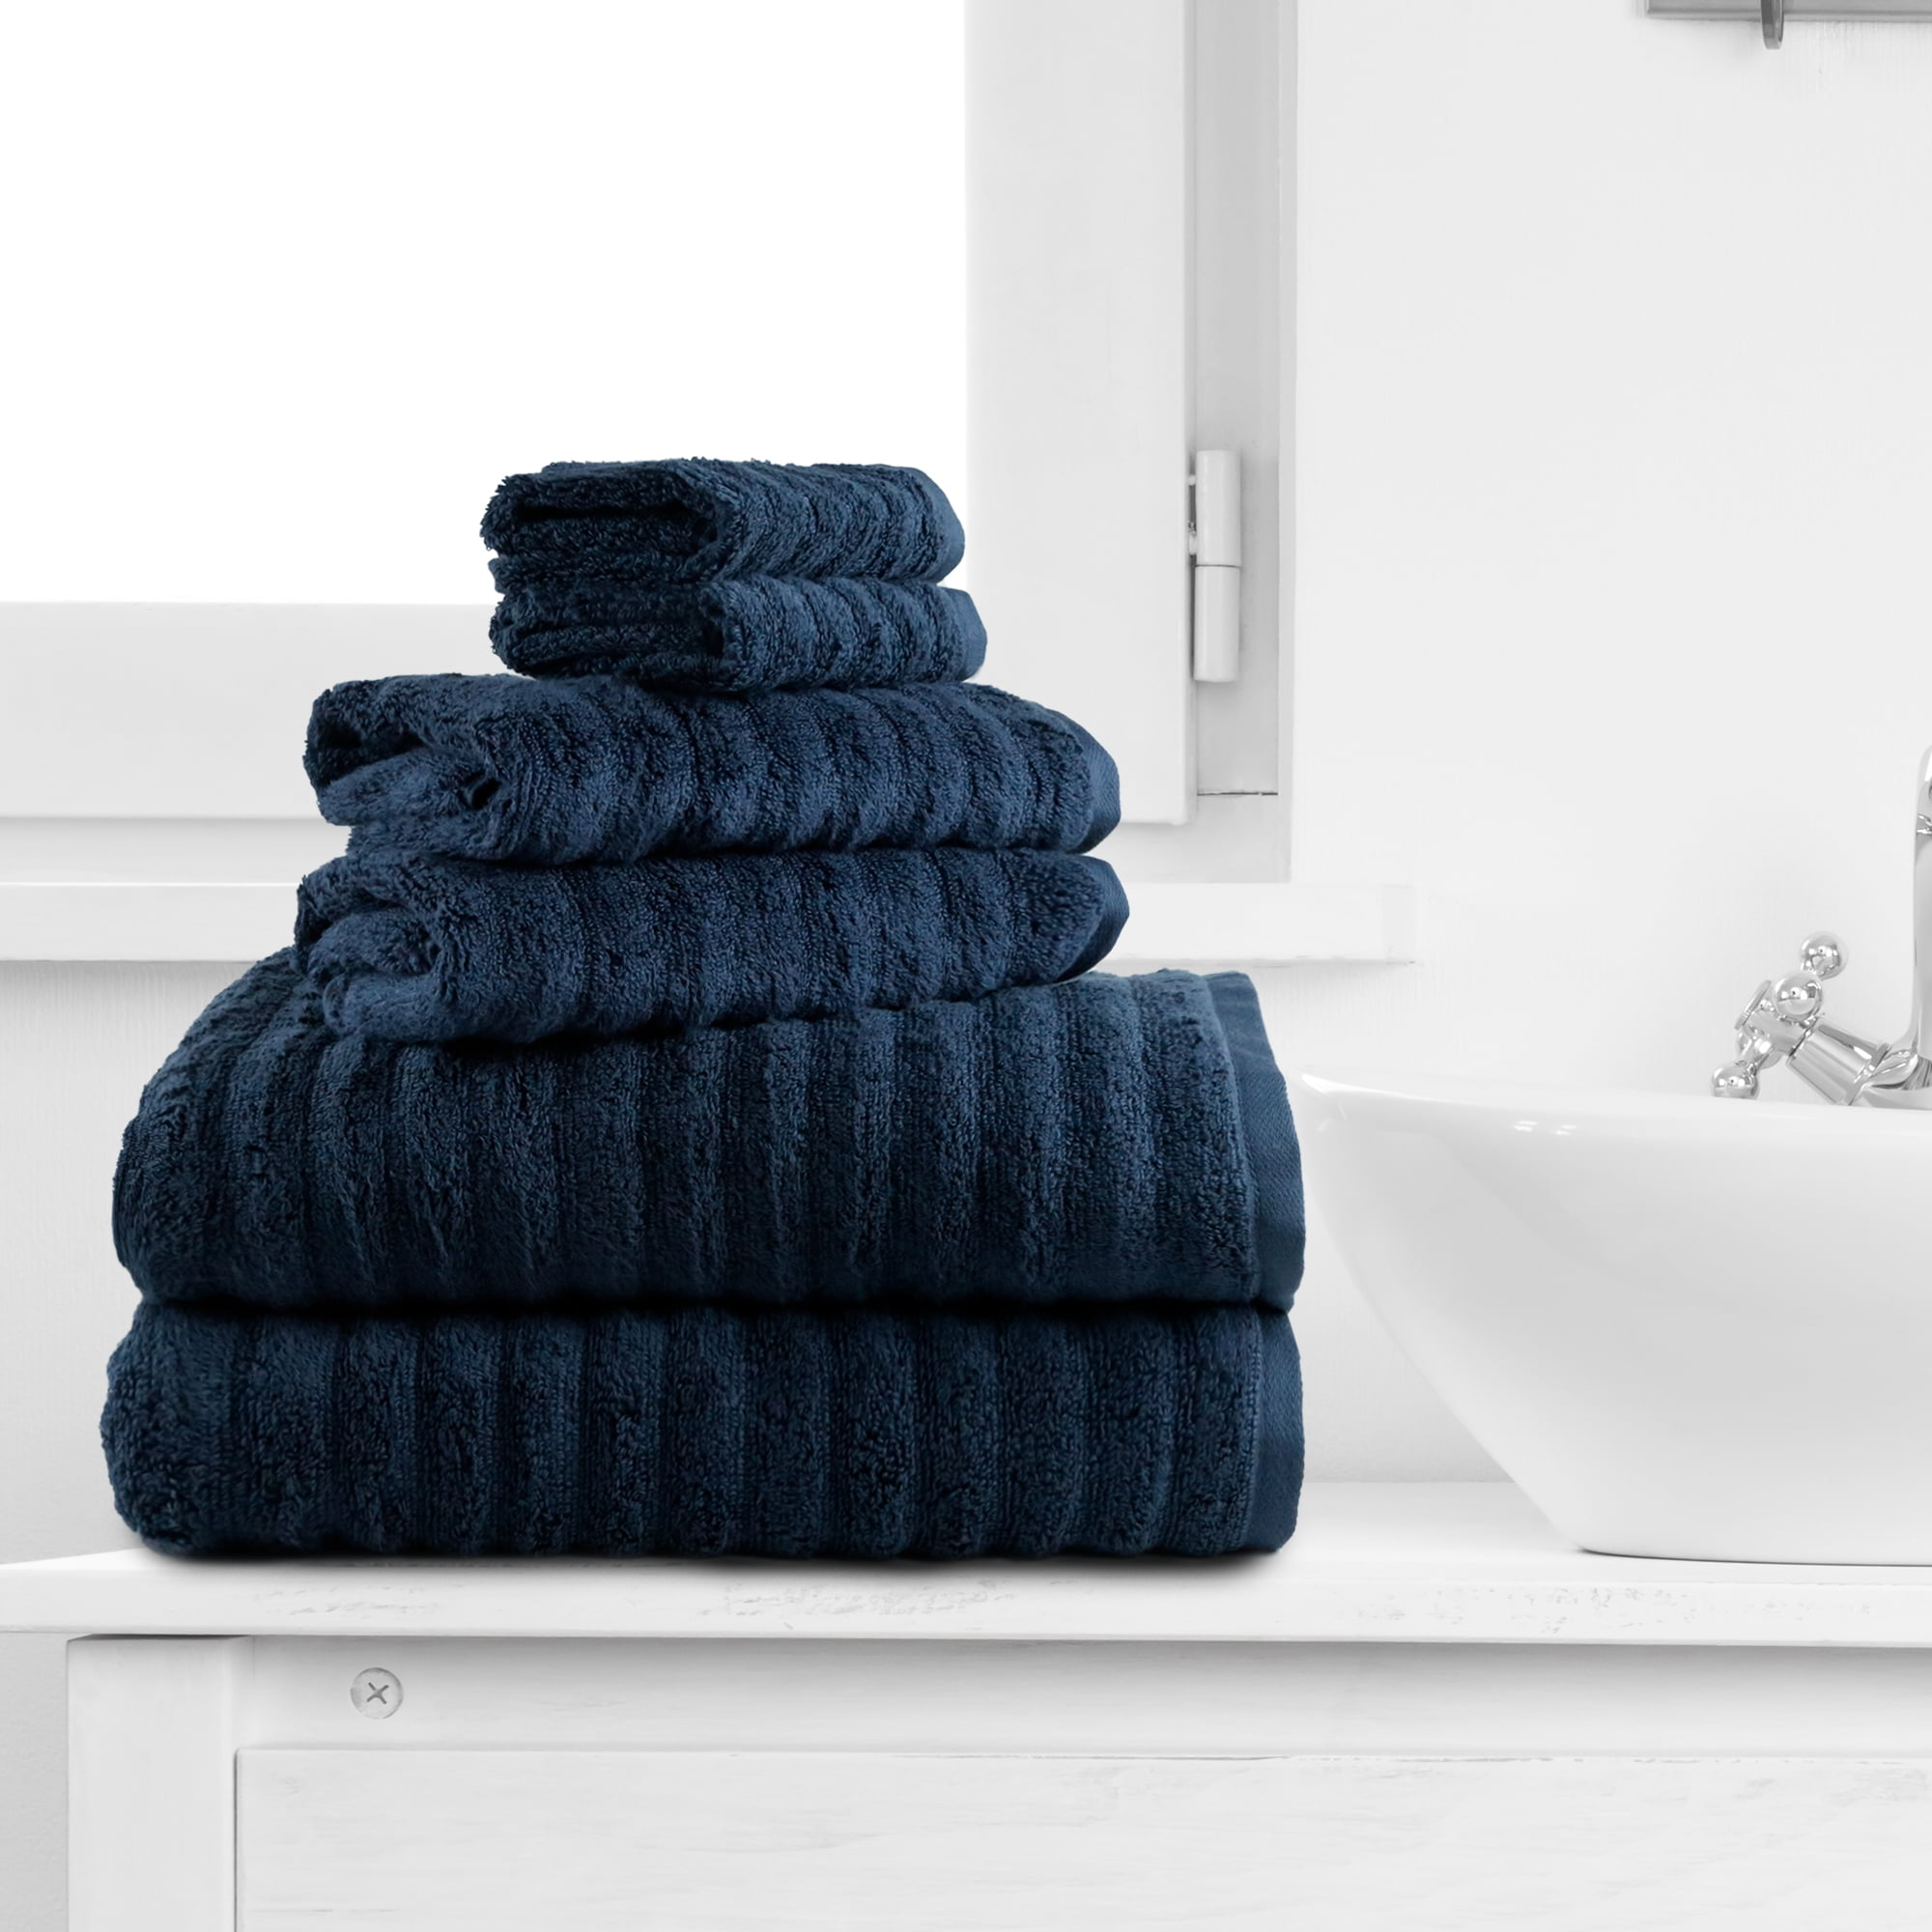 The Clean Store 6-Piece Blue Diamond Cotton Bath Towel Set (2-Bath Towels 2-Hand Towels and 2-Washcloths)